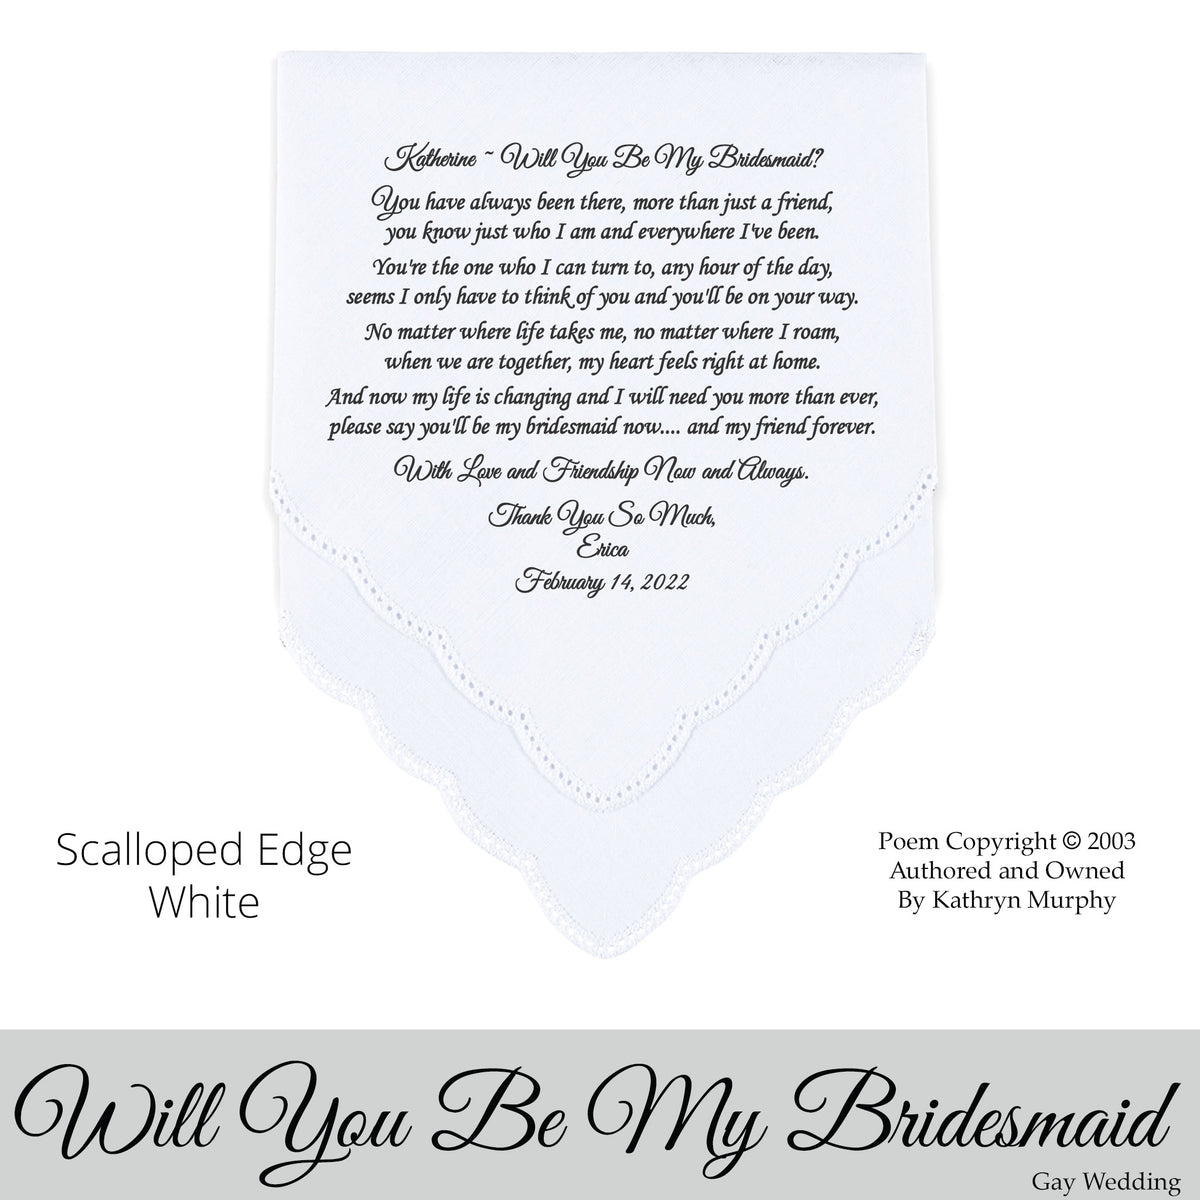 Gay Wedding Gift for the bridesmaid poem printed wedding hankie